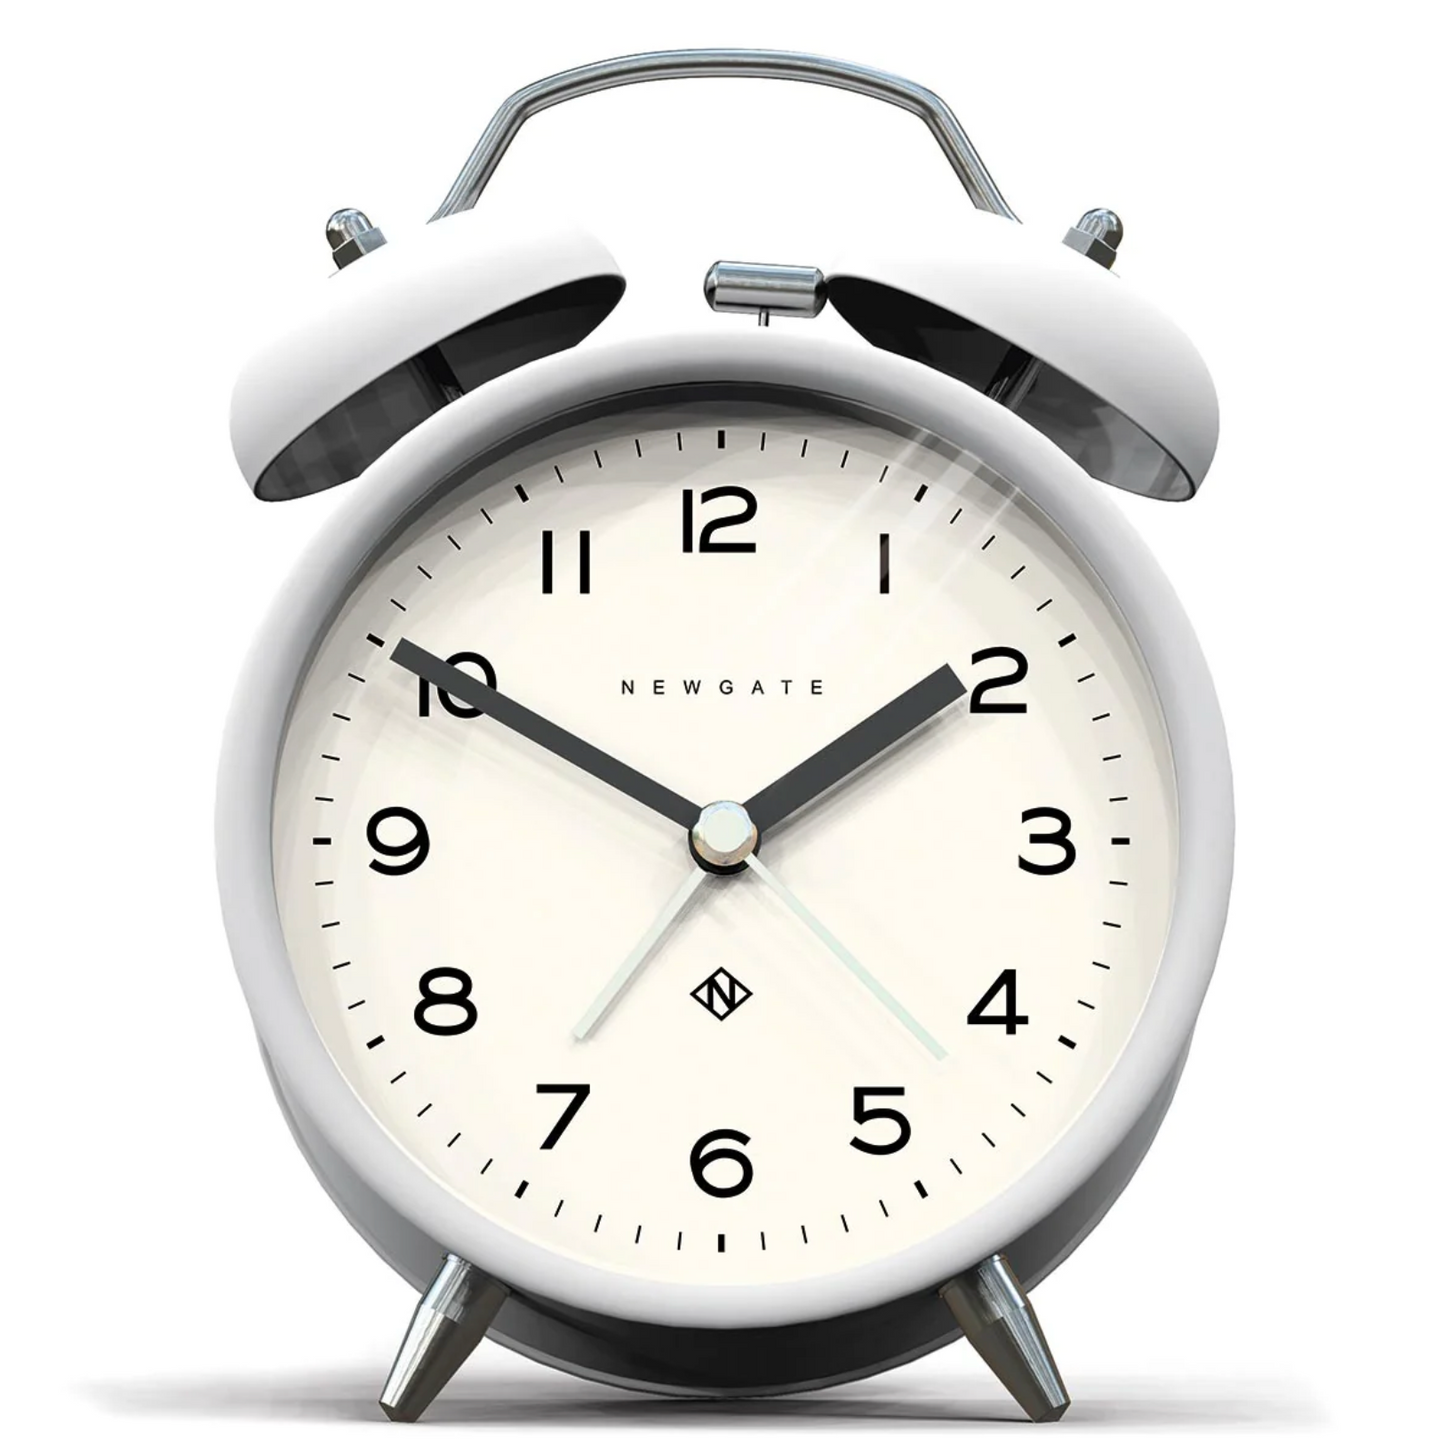 Newgate Charlie Bell Echo Alarm Clock,  Pebble White